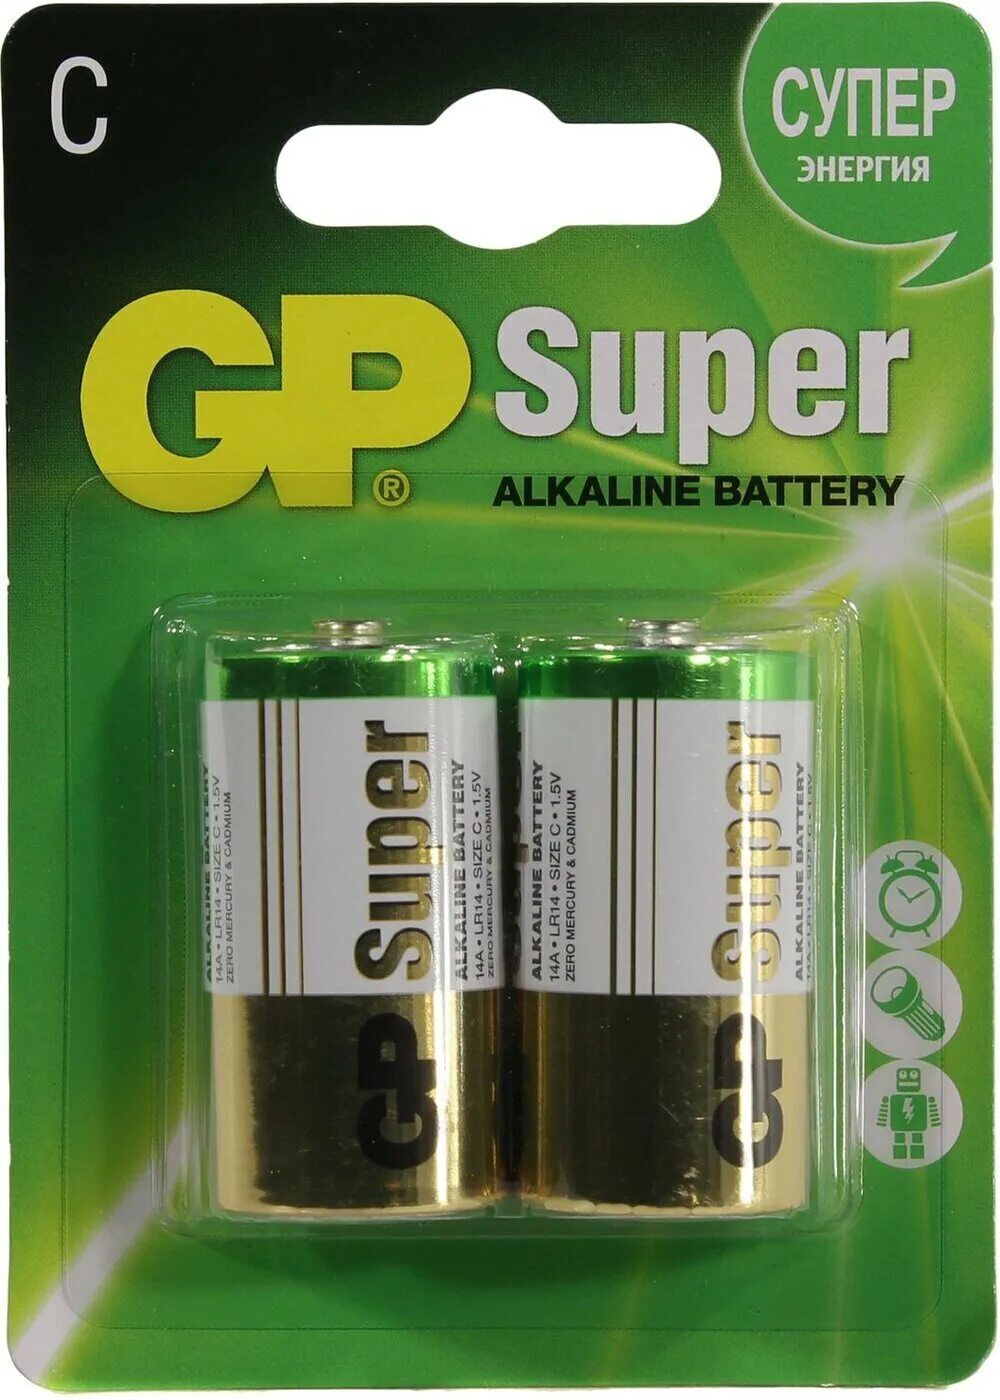 Батарейки lr14 Size c 1.5 Volts. Бат. GP lr14 bl2 2шт. Батарейка c GP super lr14 Alkaline 1.5v 034473. Батарейки типа LR 14 1.5V. Батарейки тип c